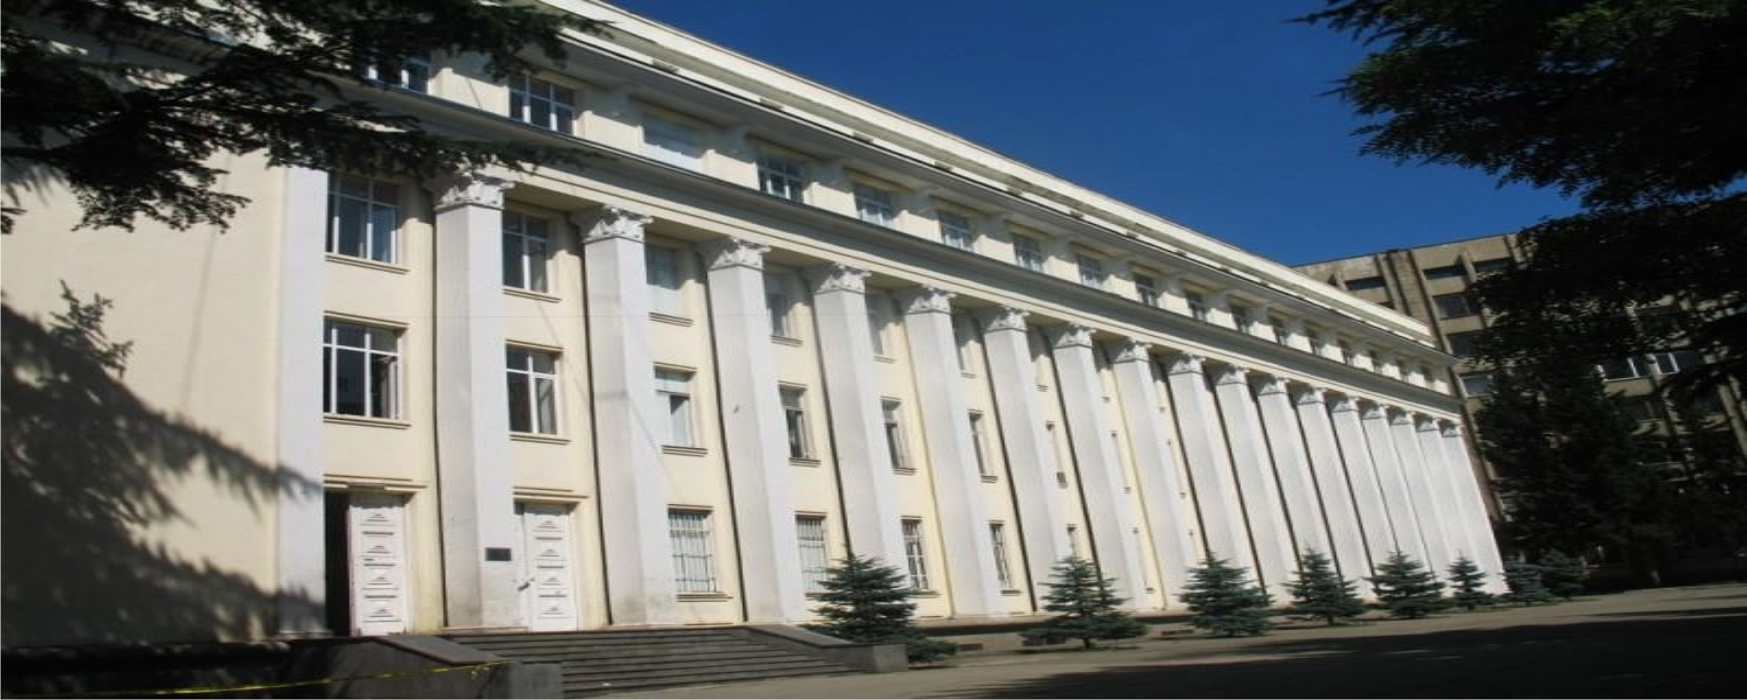 Tbilisi State Medical University 03